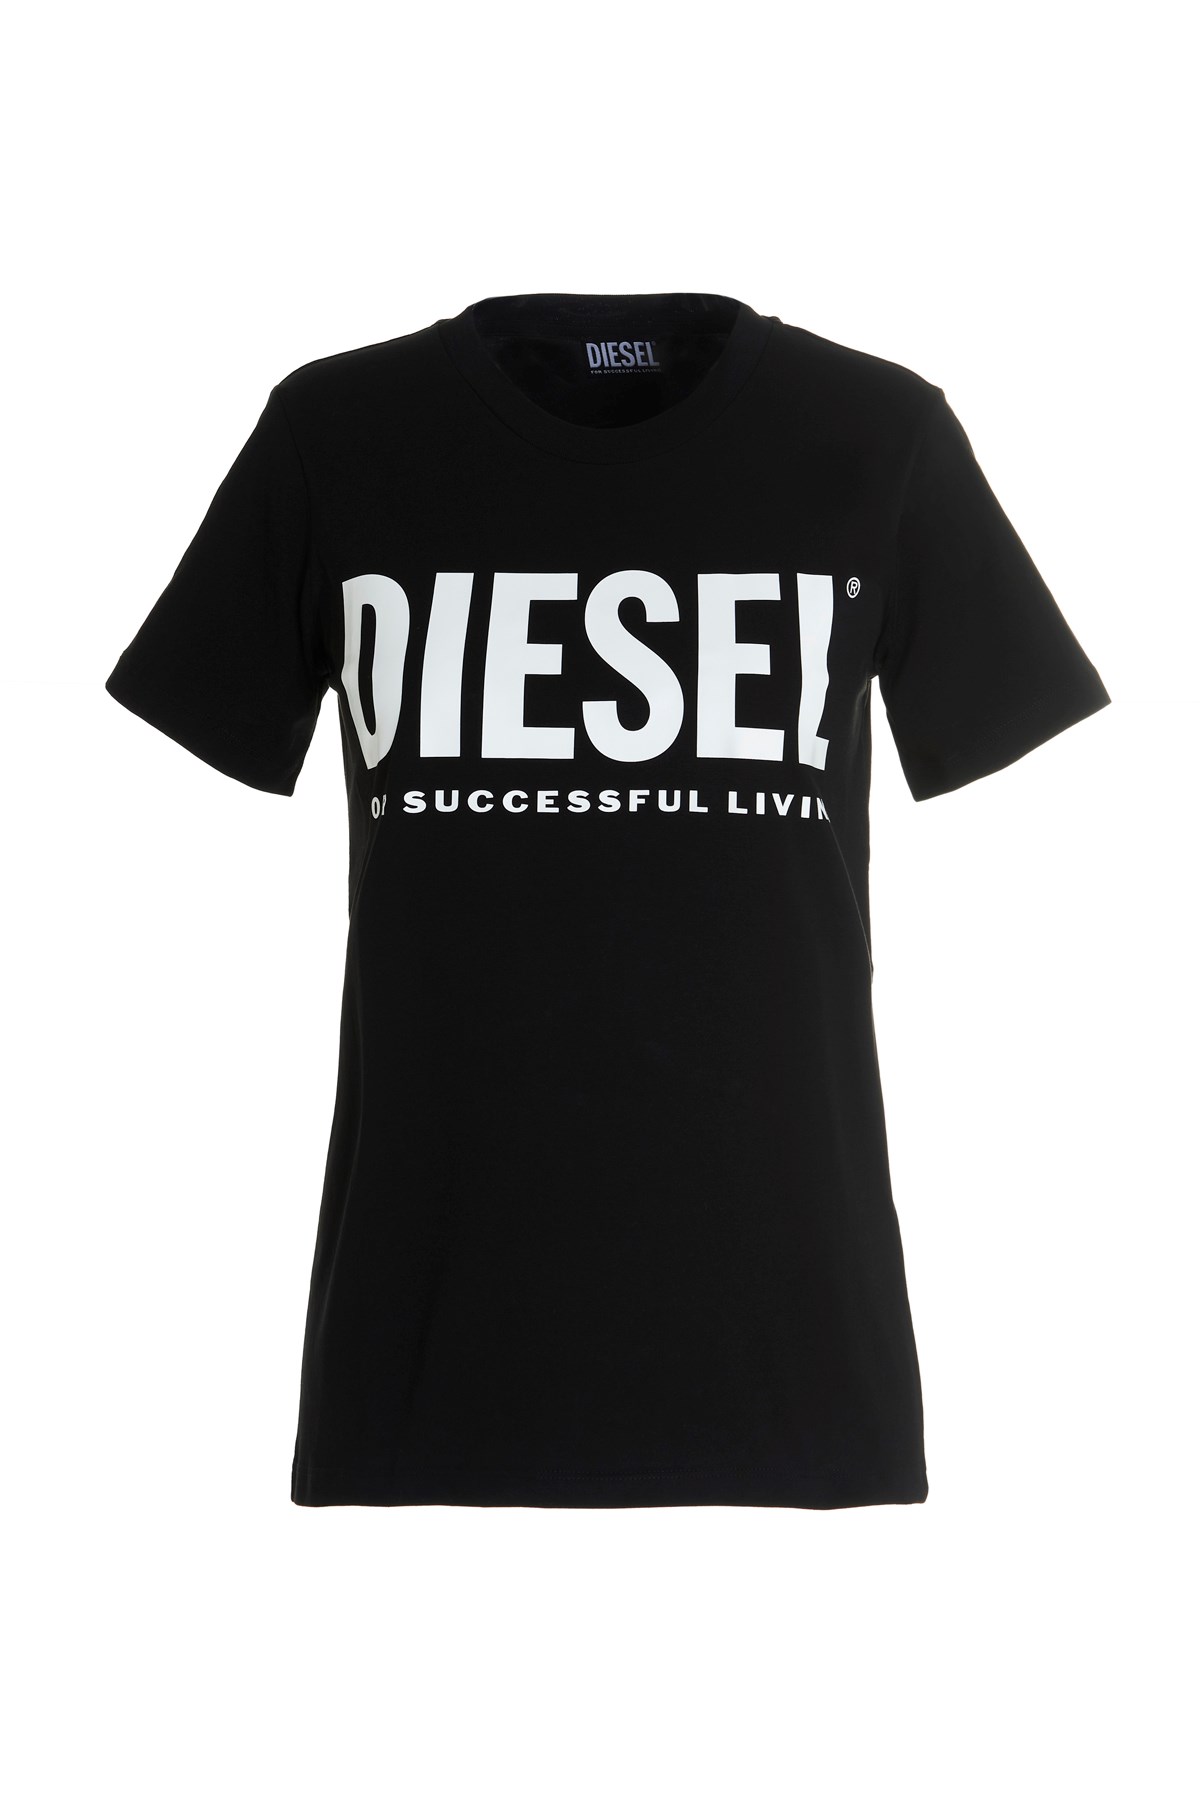 DIESEL Logo T-Shirt